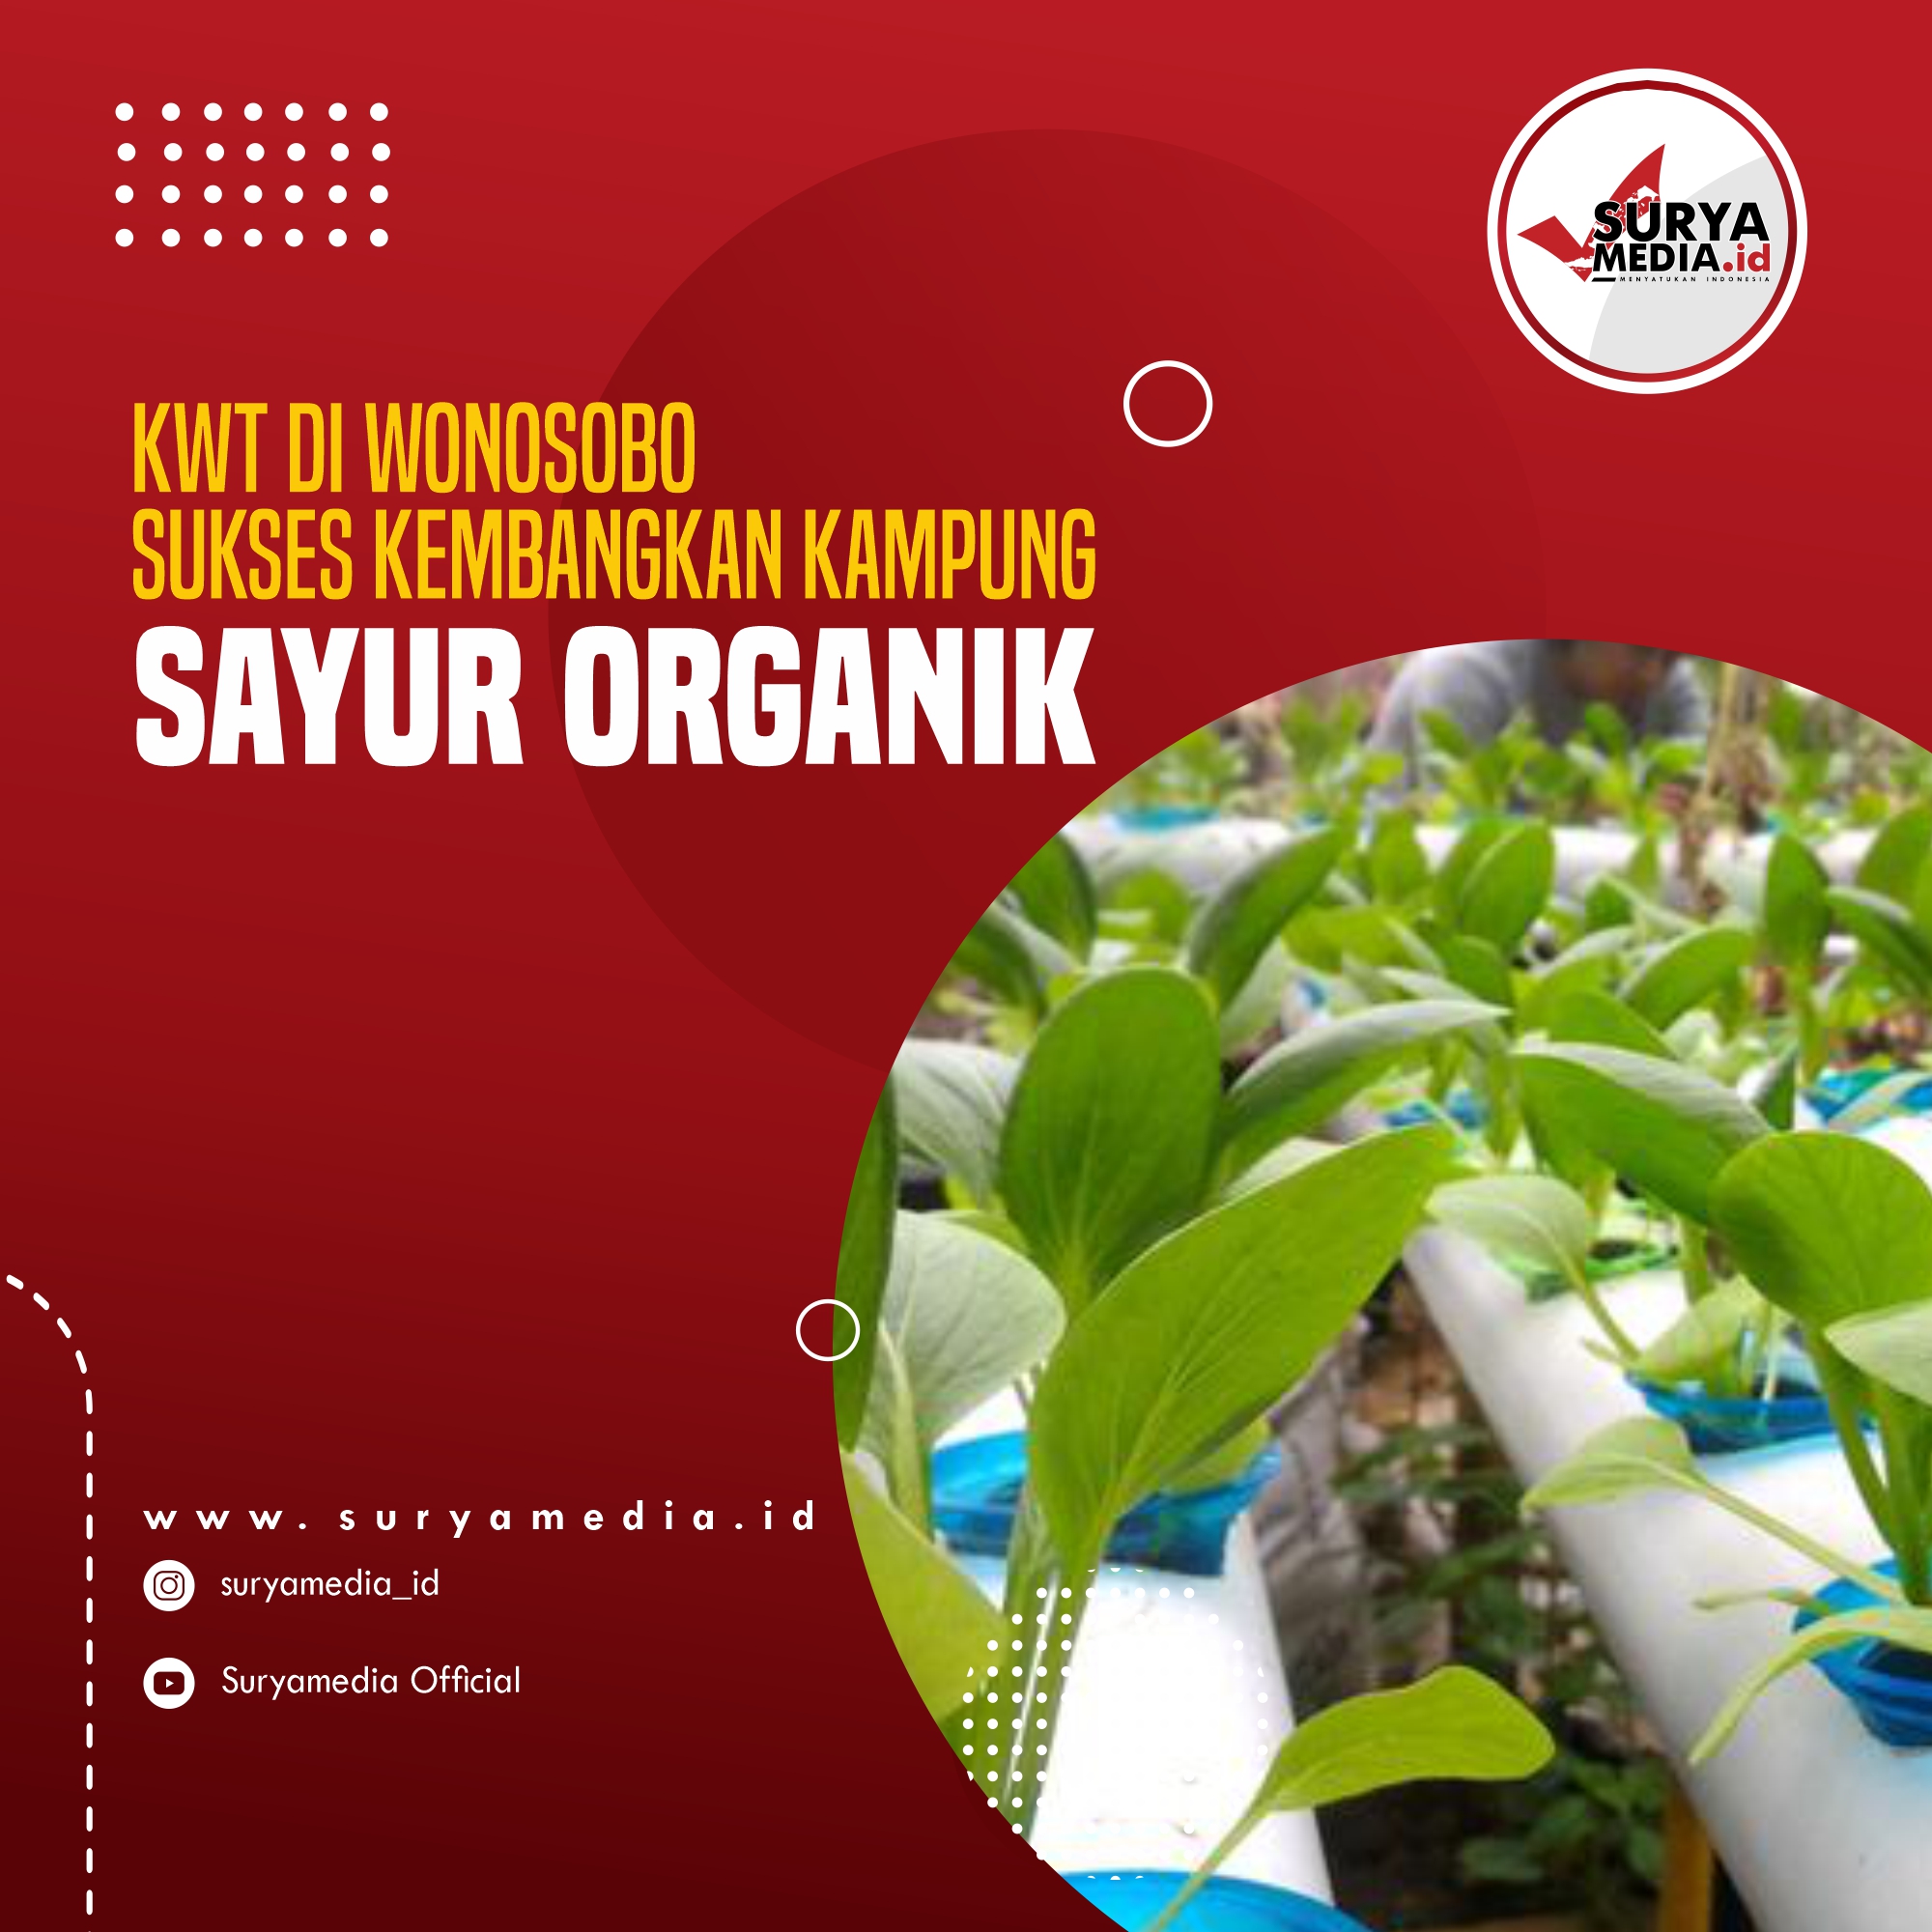 Kwt di wonosobo sukses kembangkan kampung sayur organik